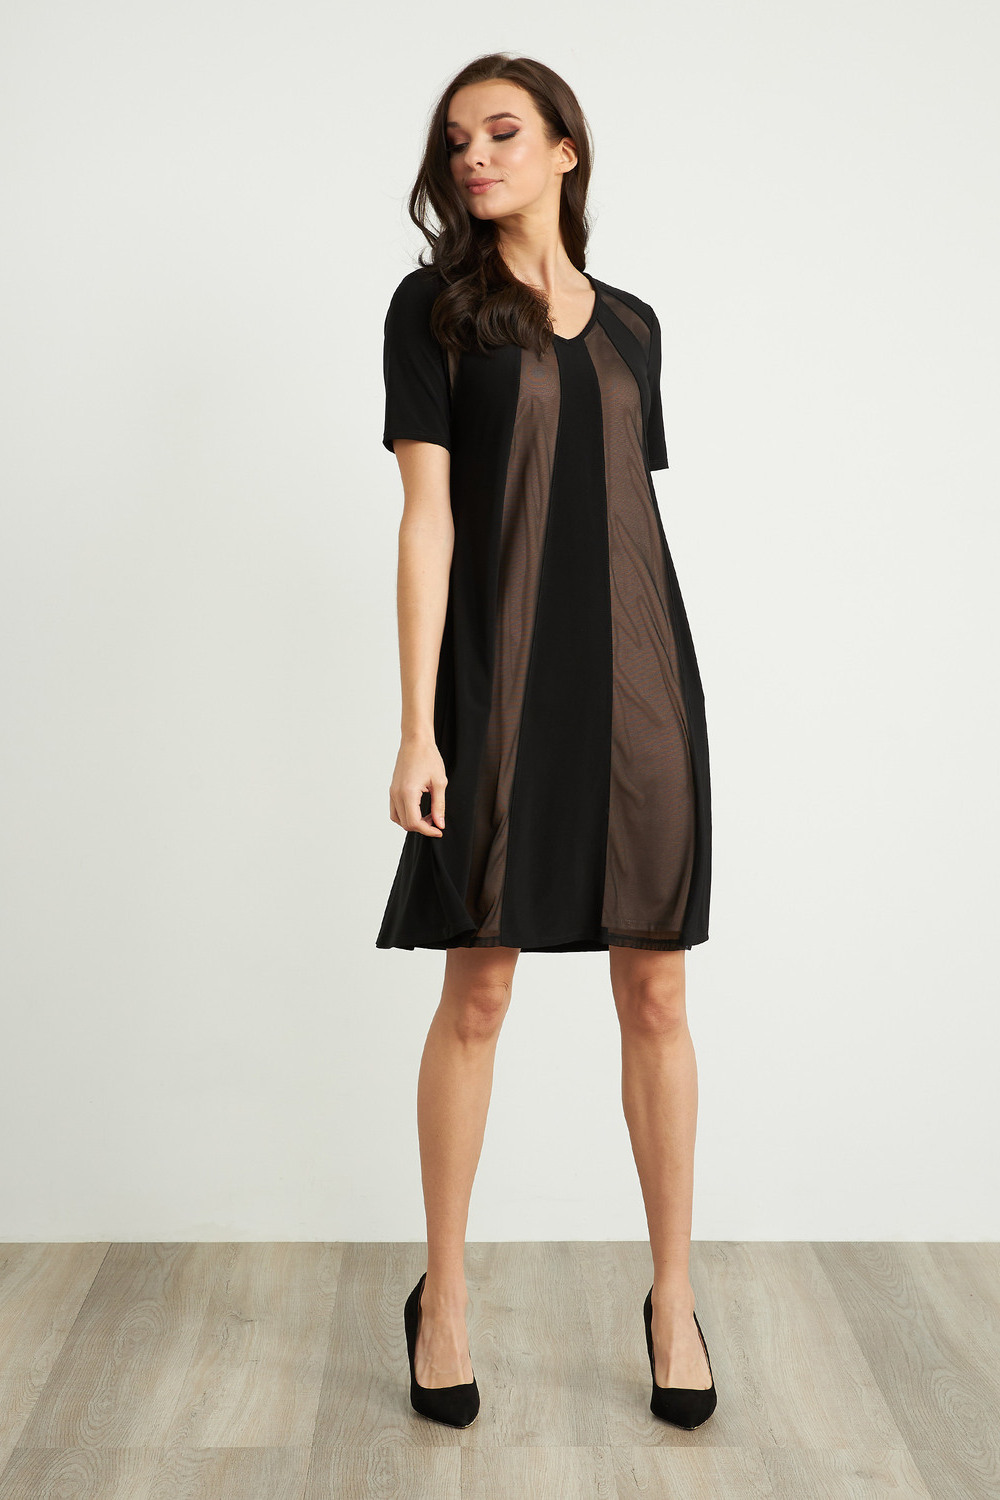 Joseph Ribkoff Mesh Panel Dress Style 211105. Black